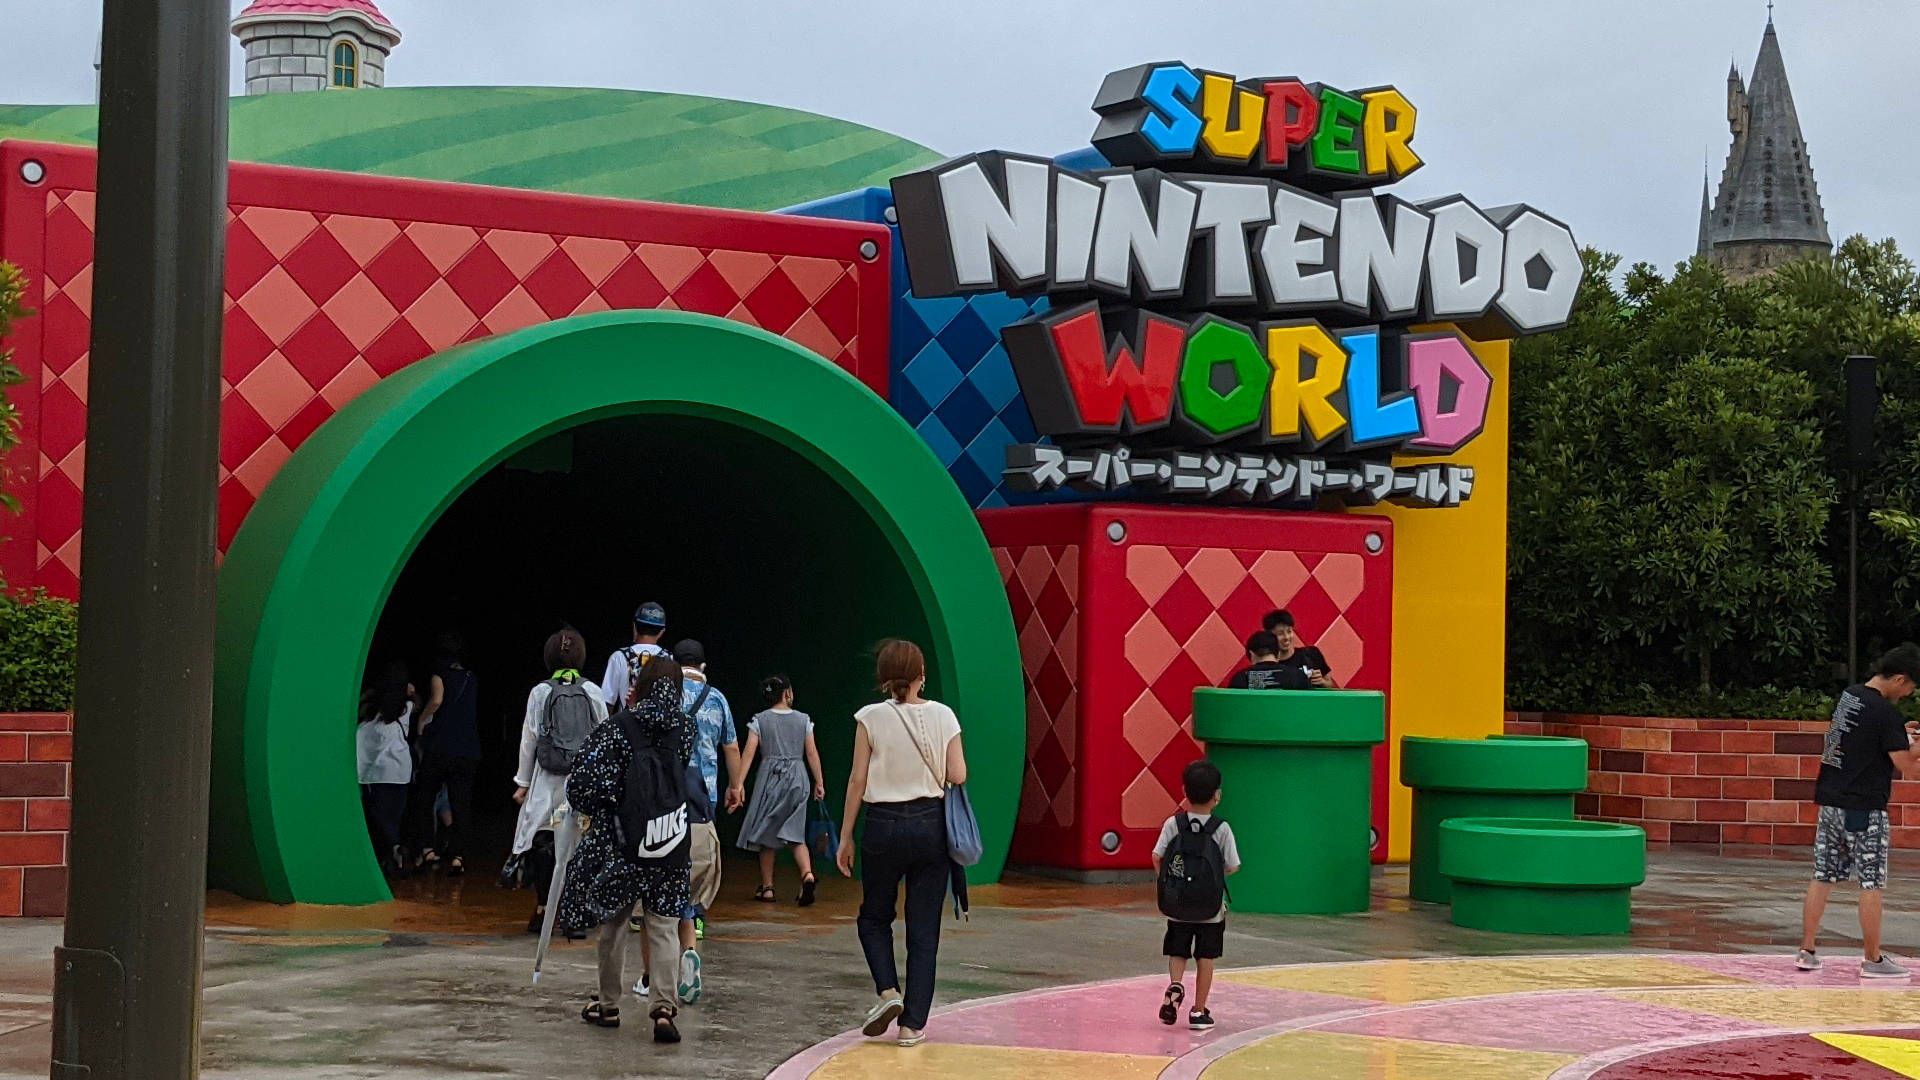 Super Nintendo World - Pipe Entrance